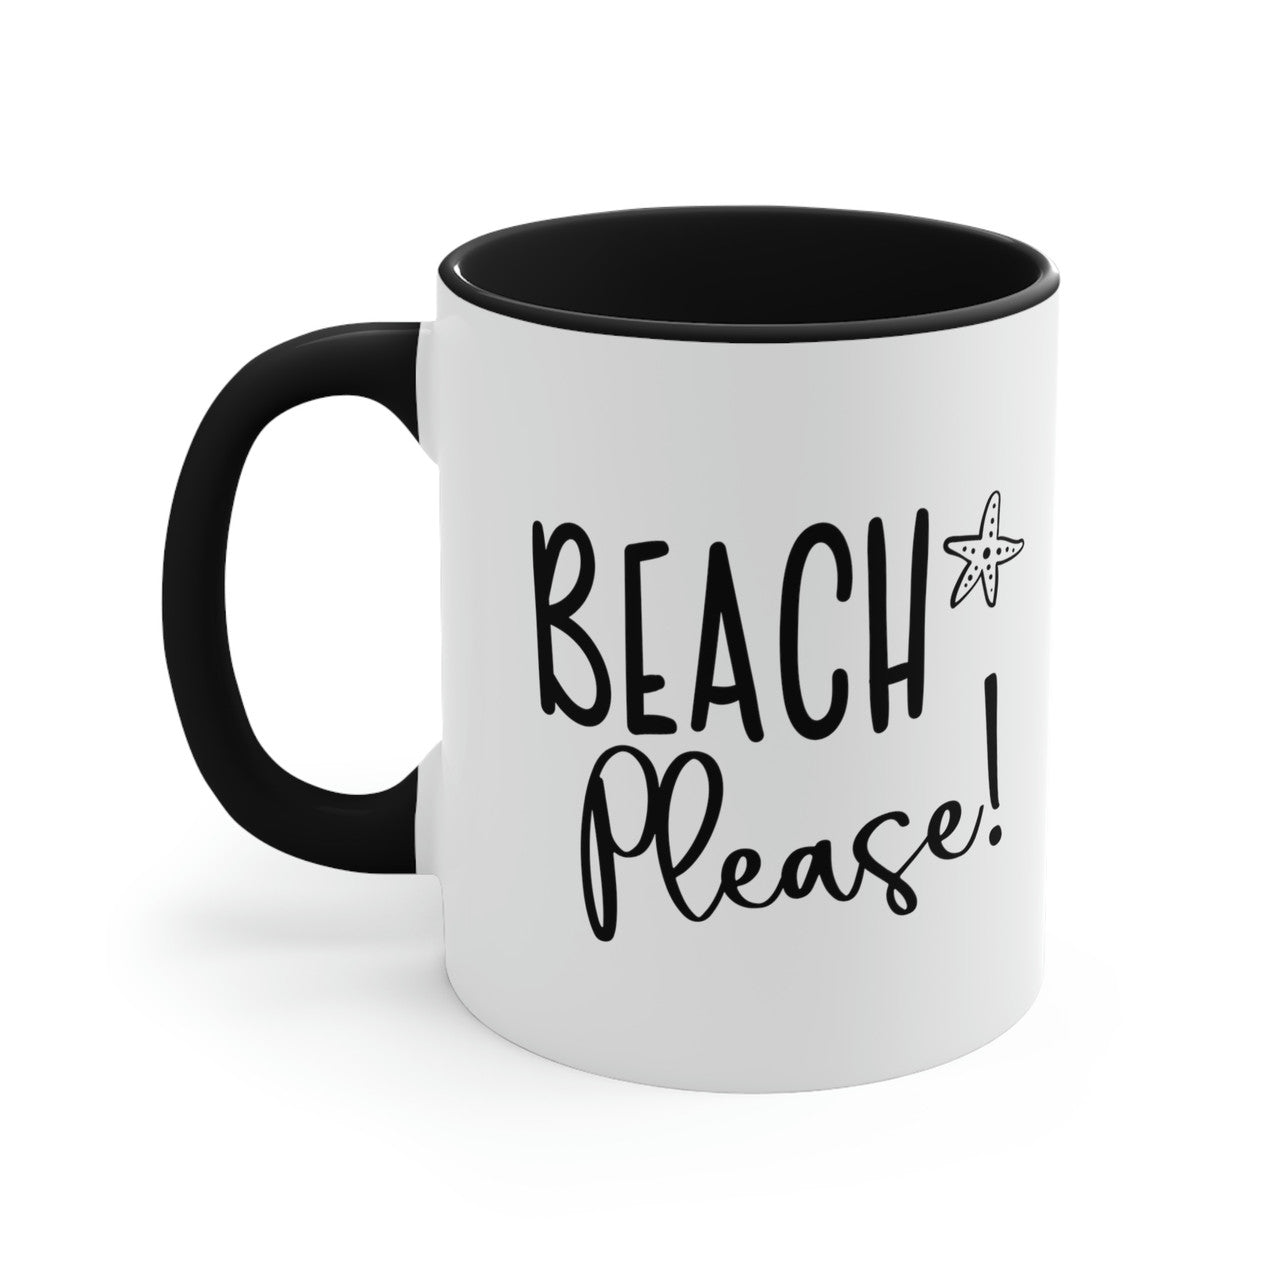 BEACH Please! Ceramic Beach Coffee Mug, 5 Colors Mugs New England Trading Co Black  